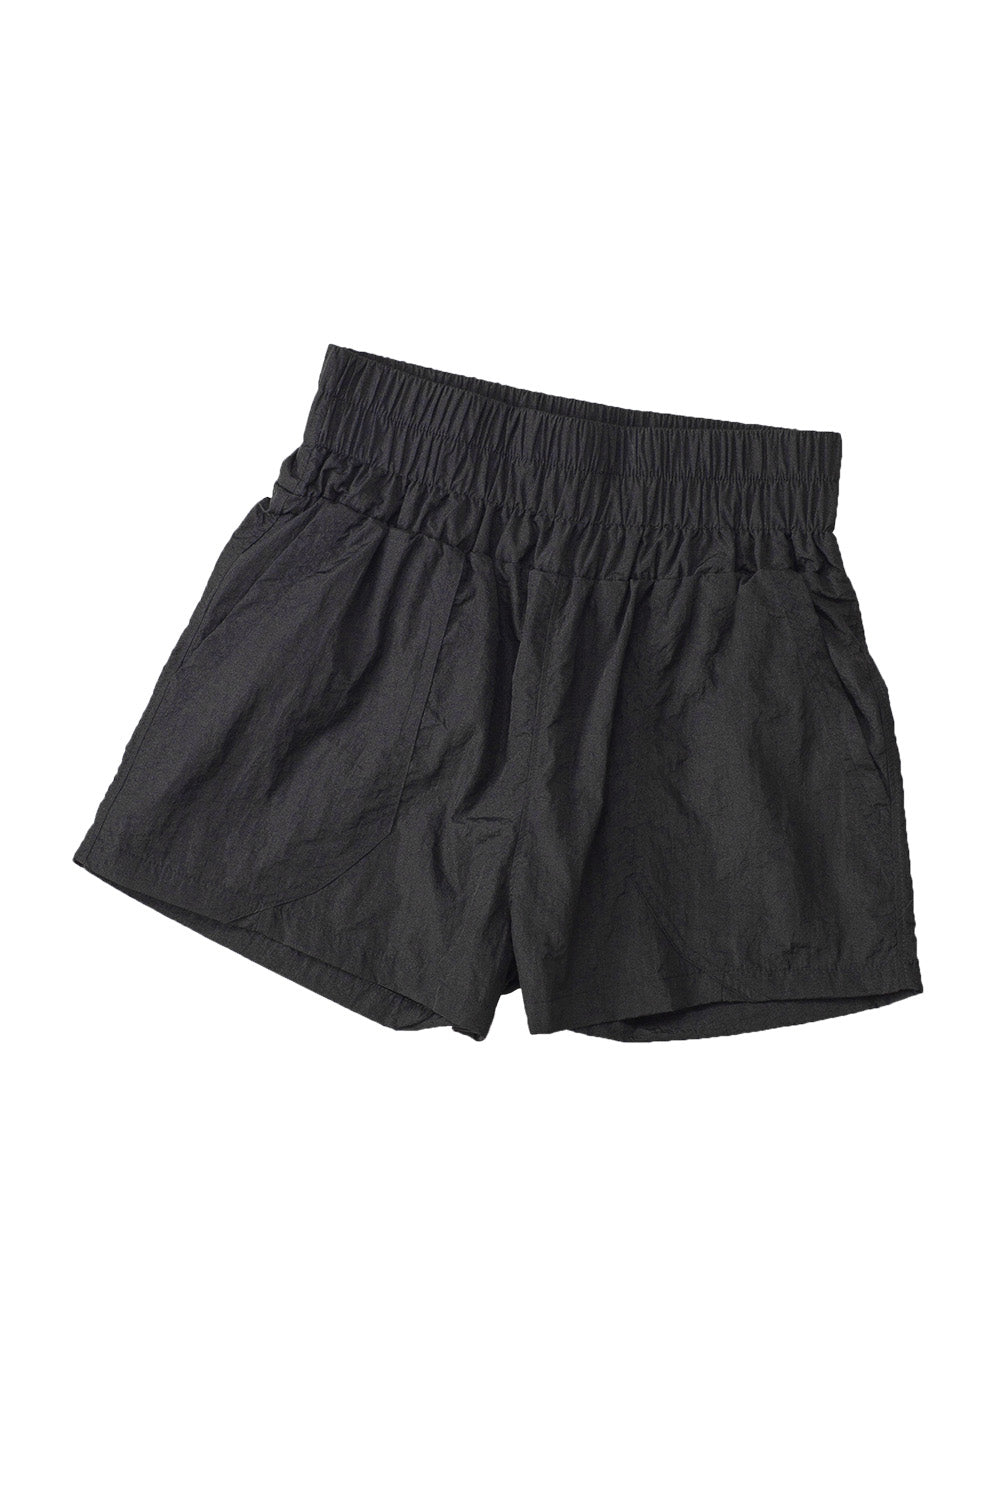 Black Elastic High Waist Side Pockets Shorts